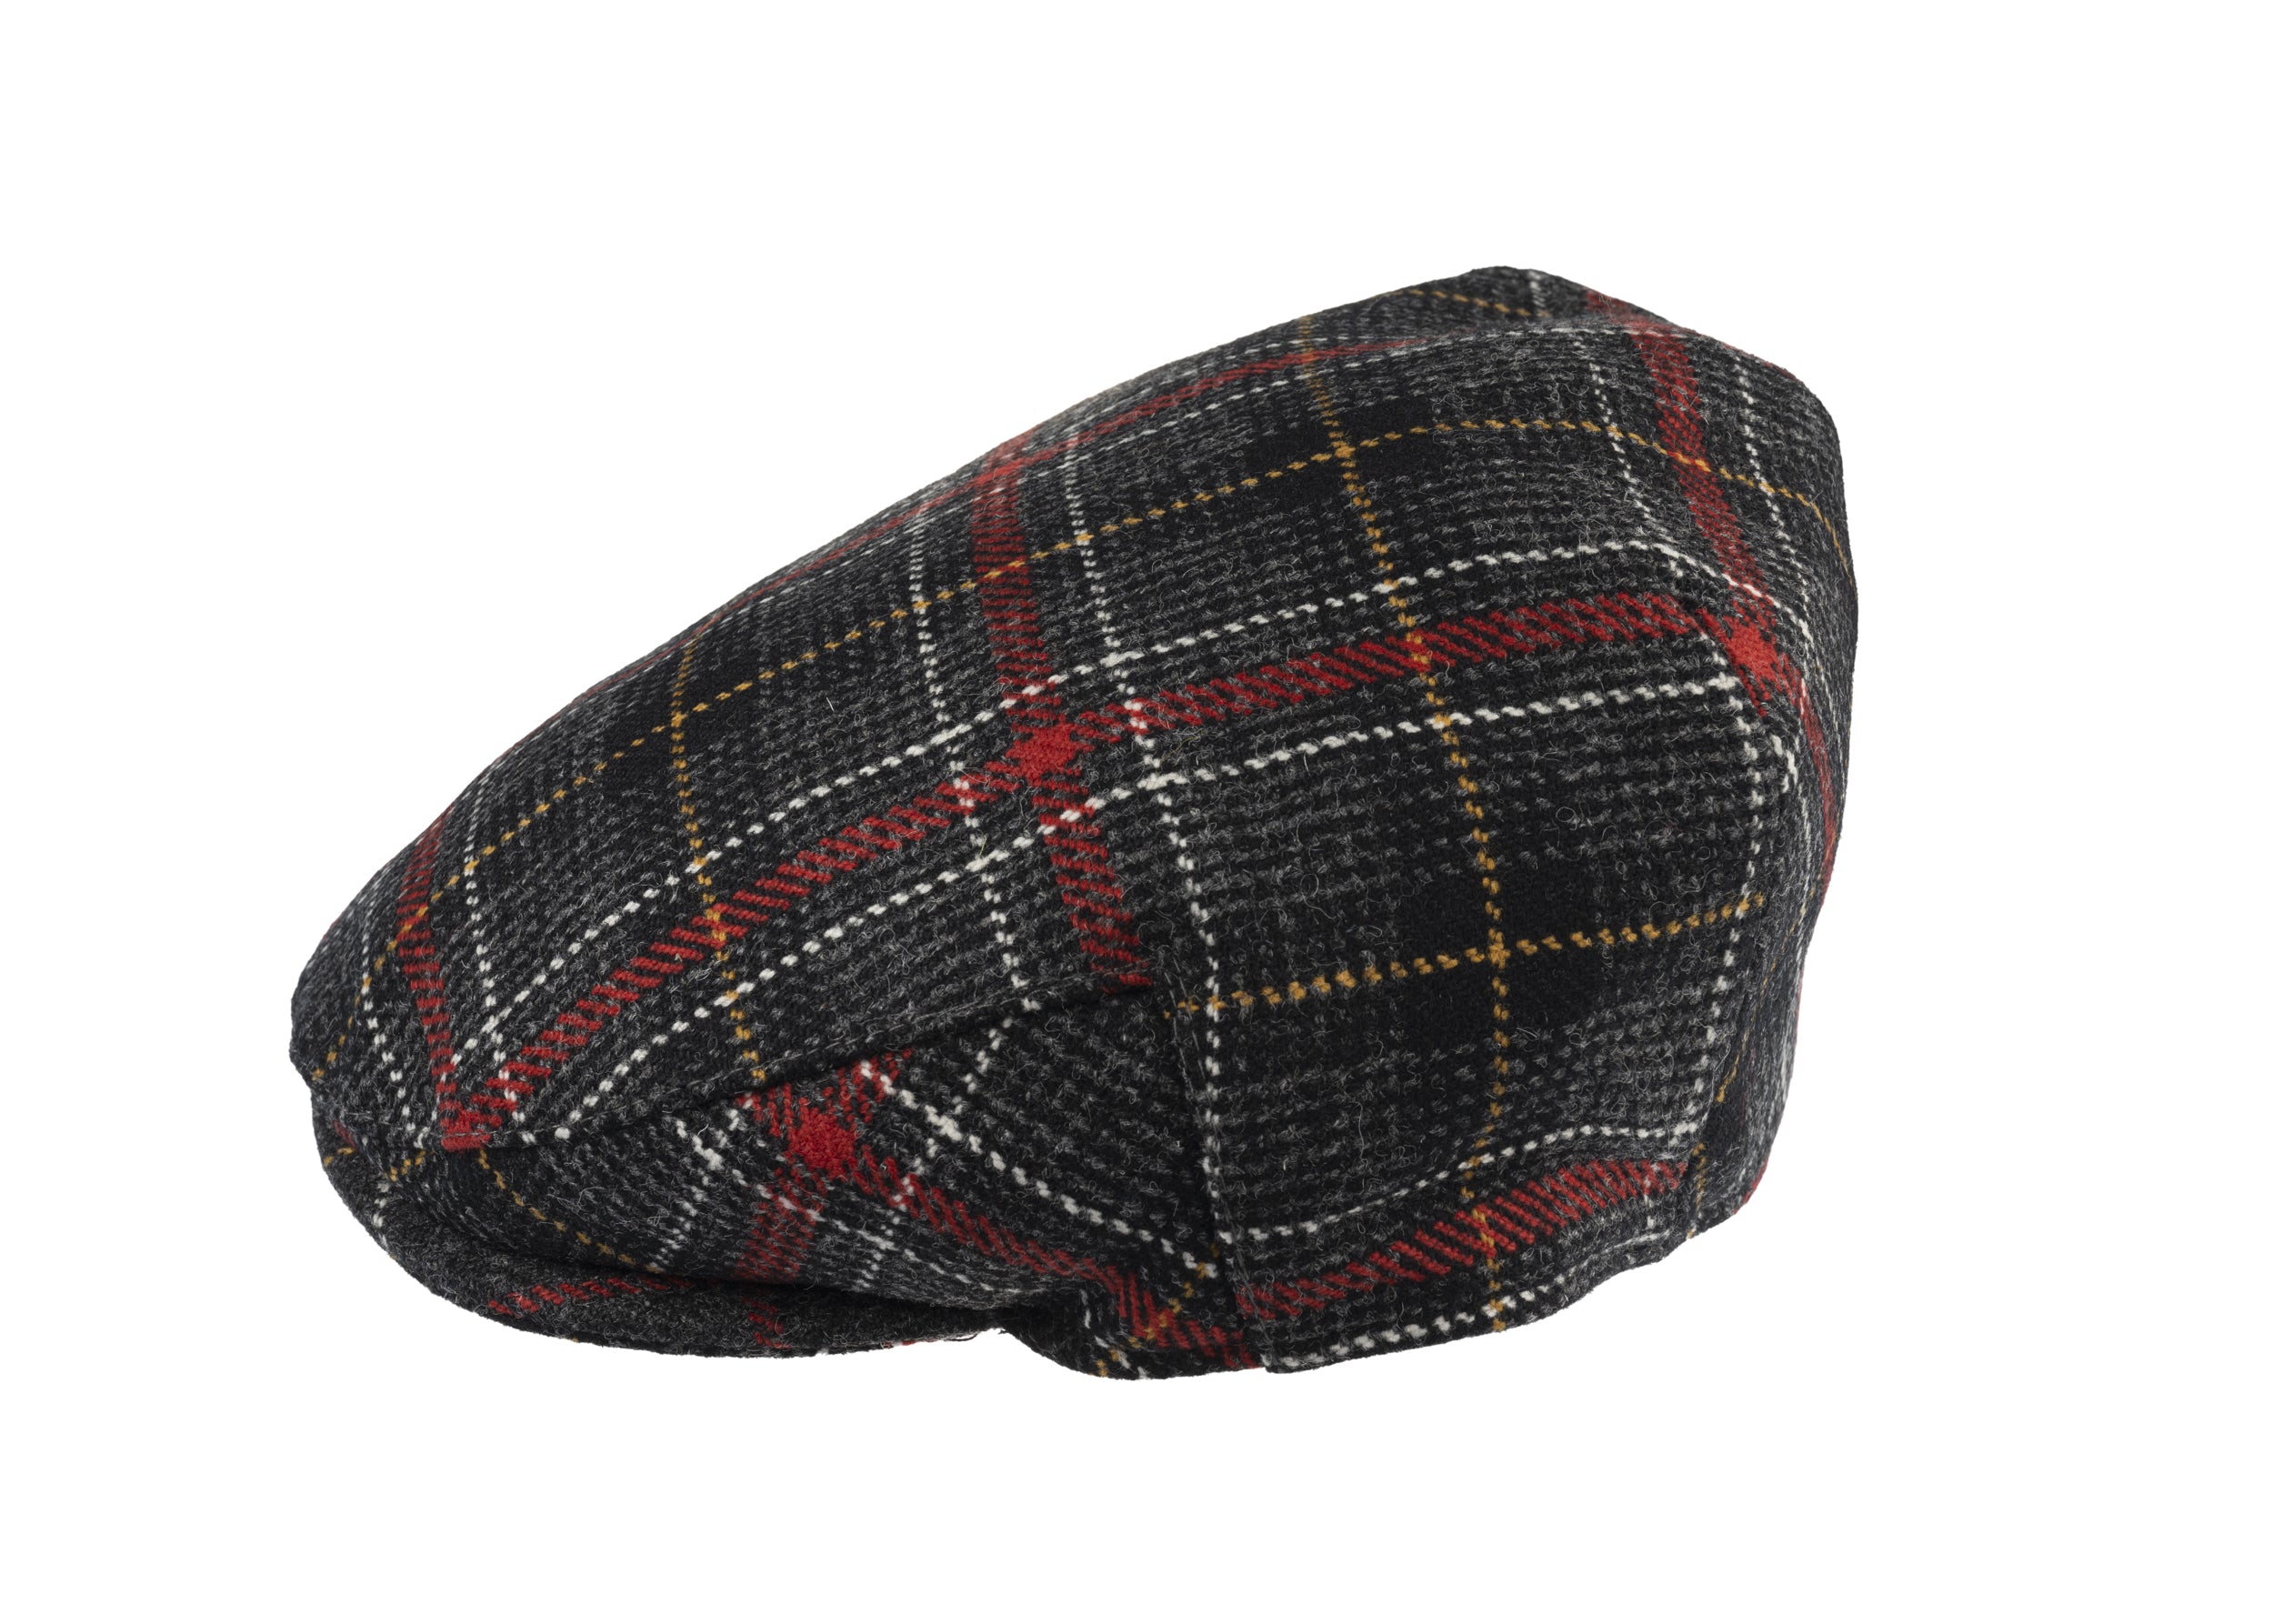 Balmoral flat cap in Christy tweed fabric